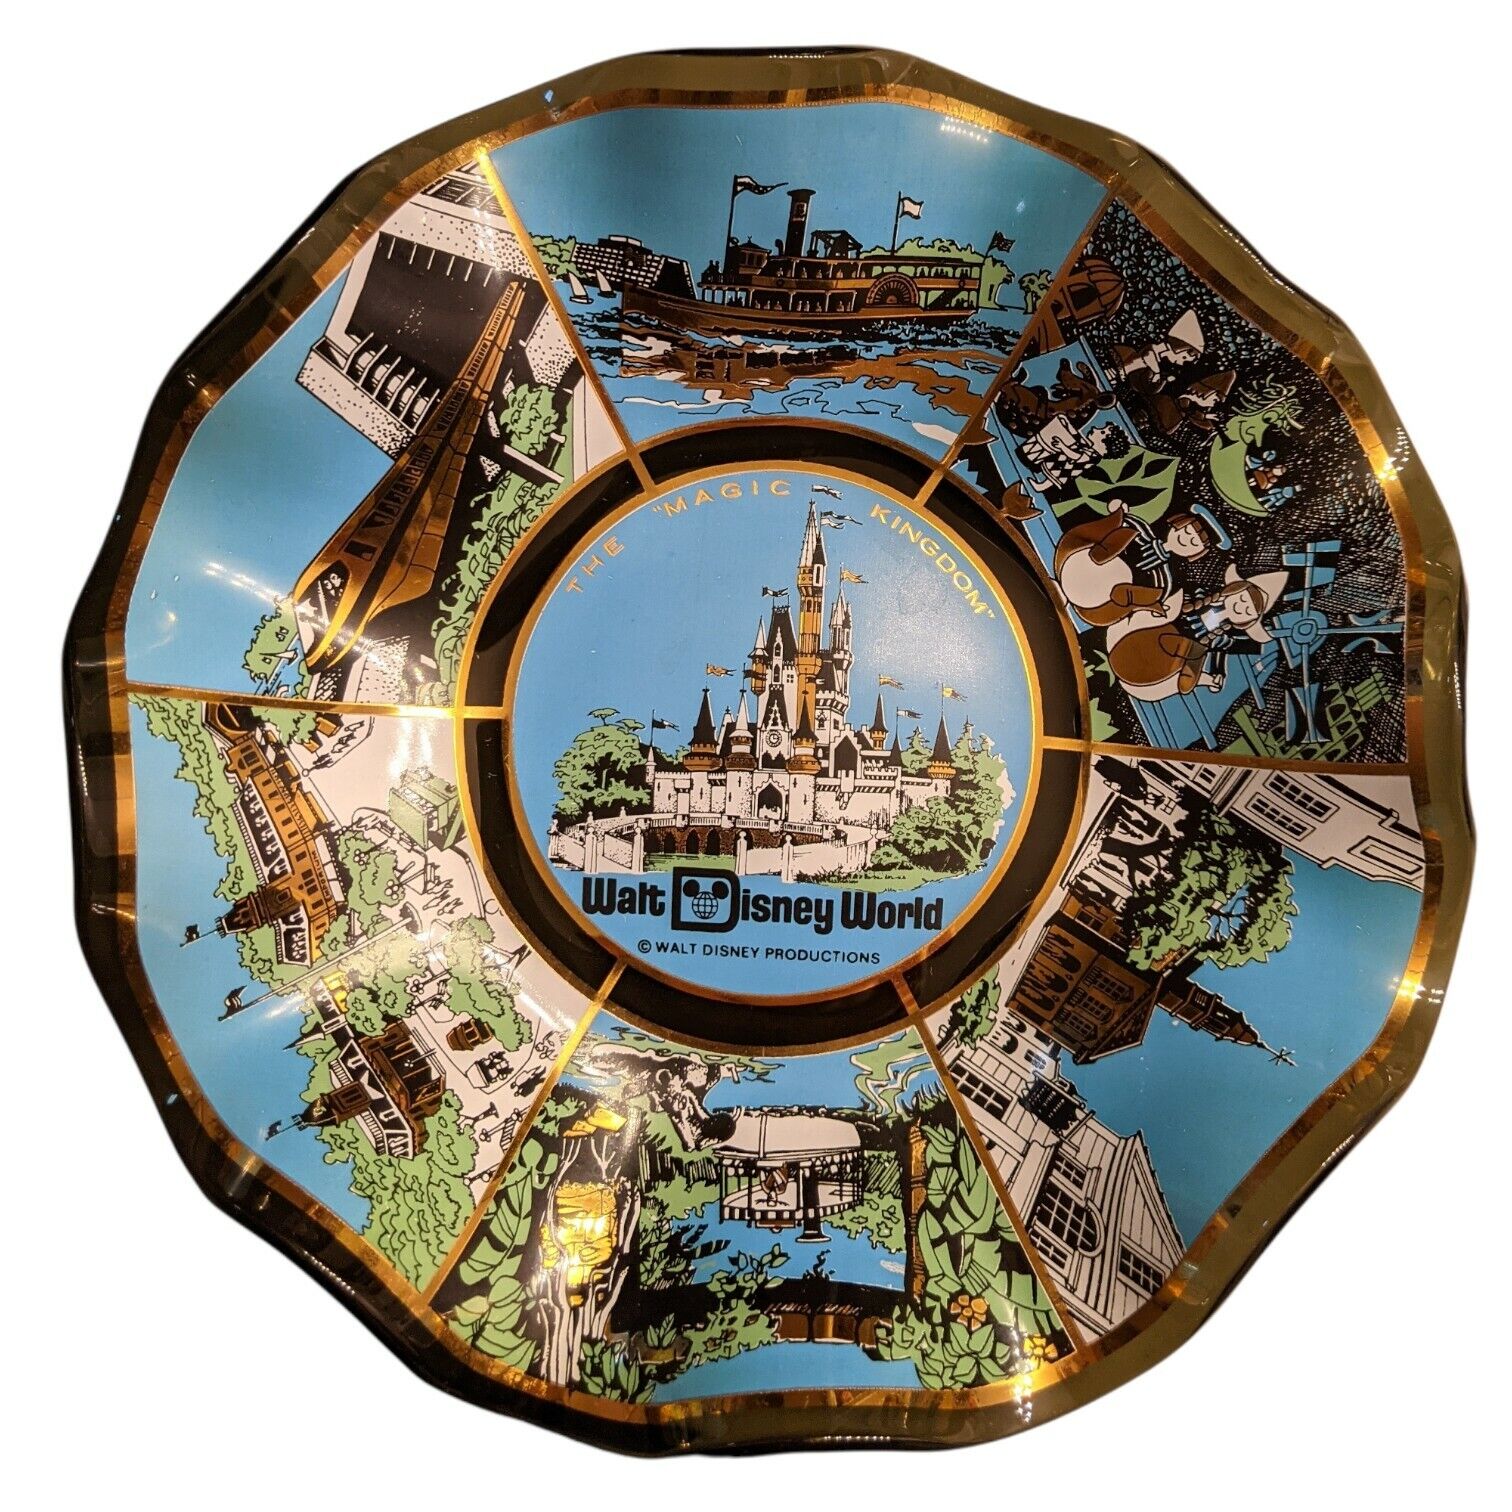 Vintage Walt Disney World “ The Magic Kingdom” Souvenir Glass Candy Dish 1970’s